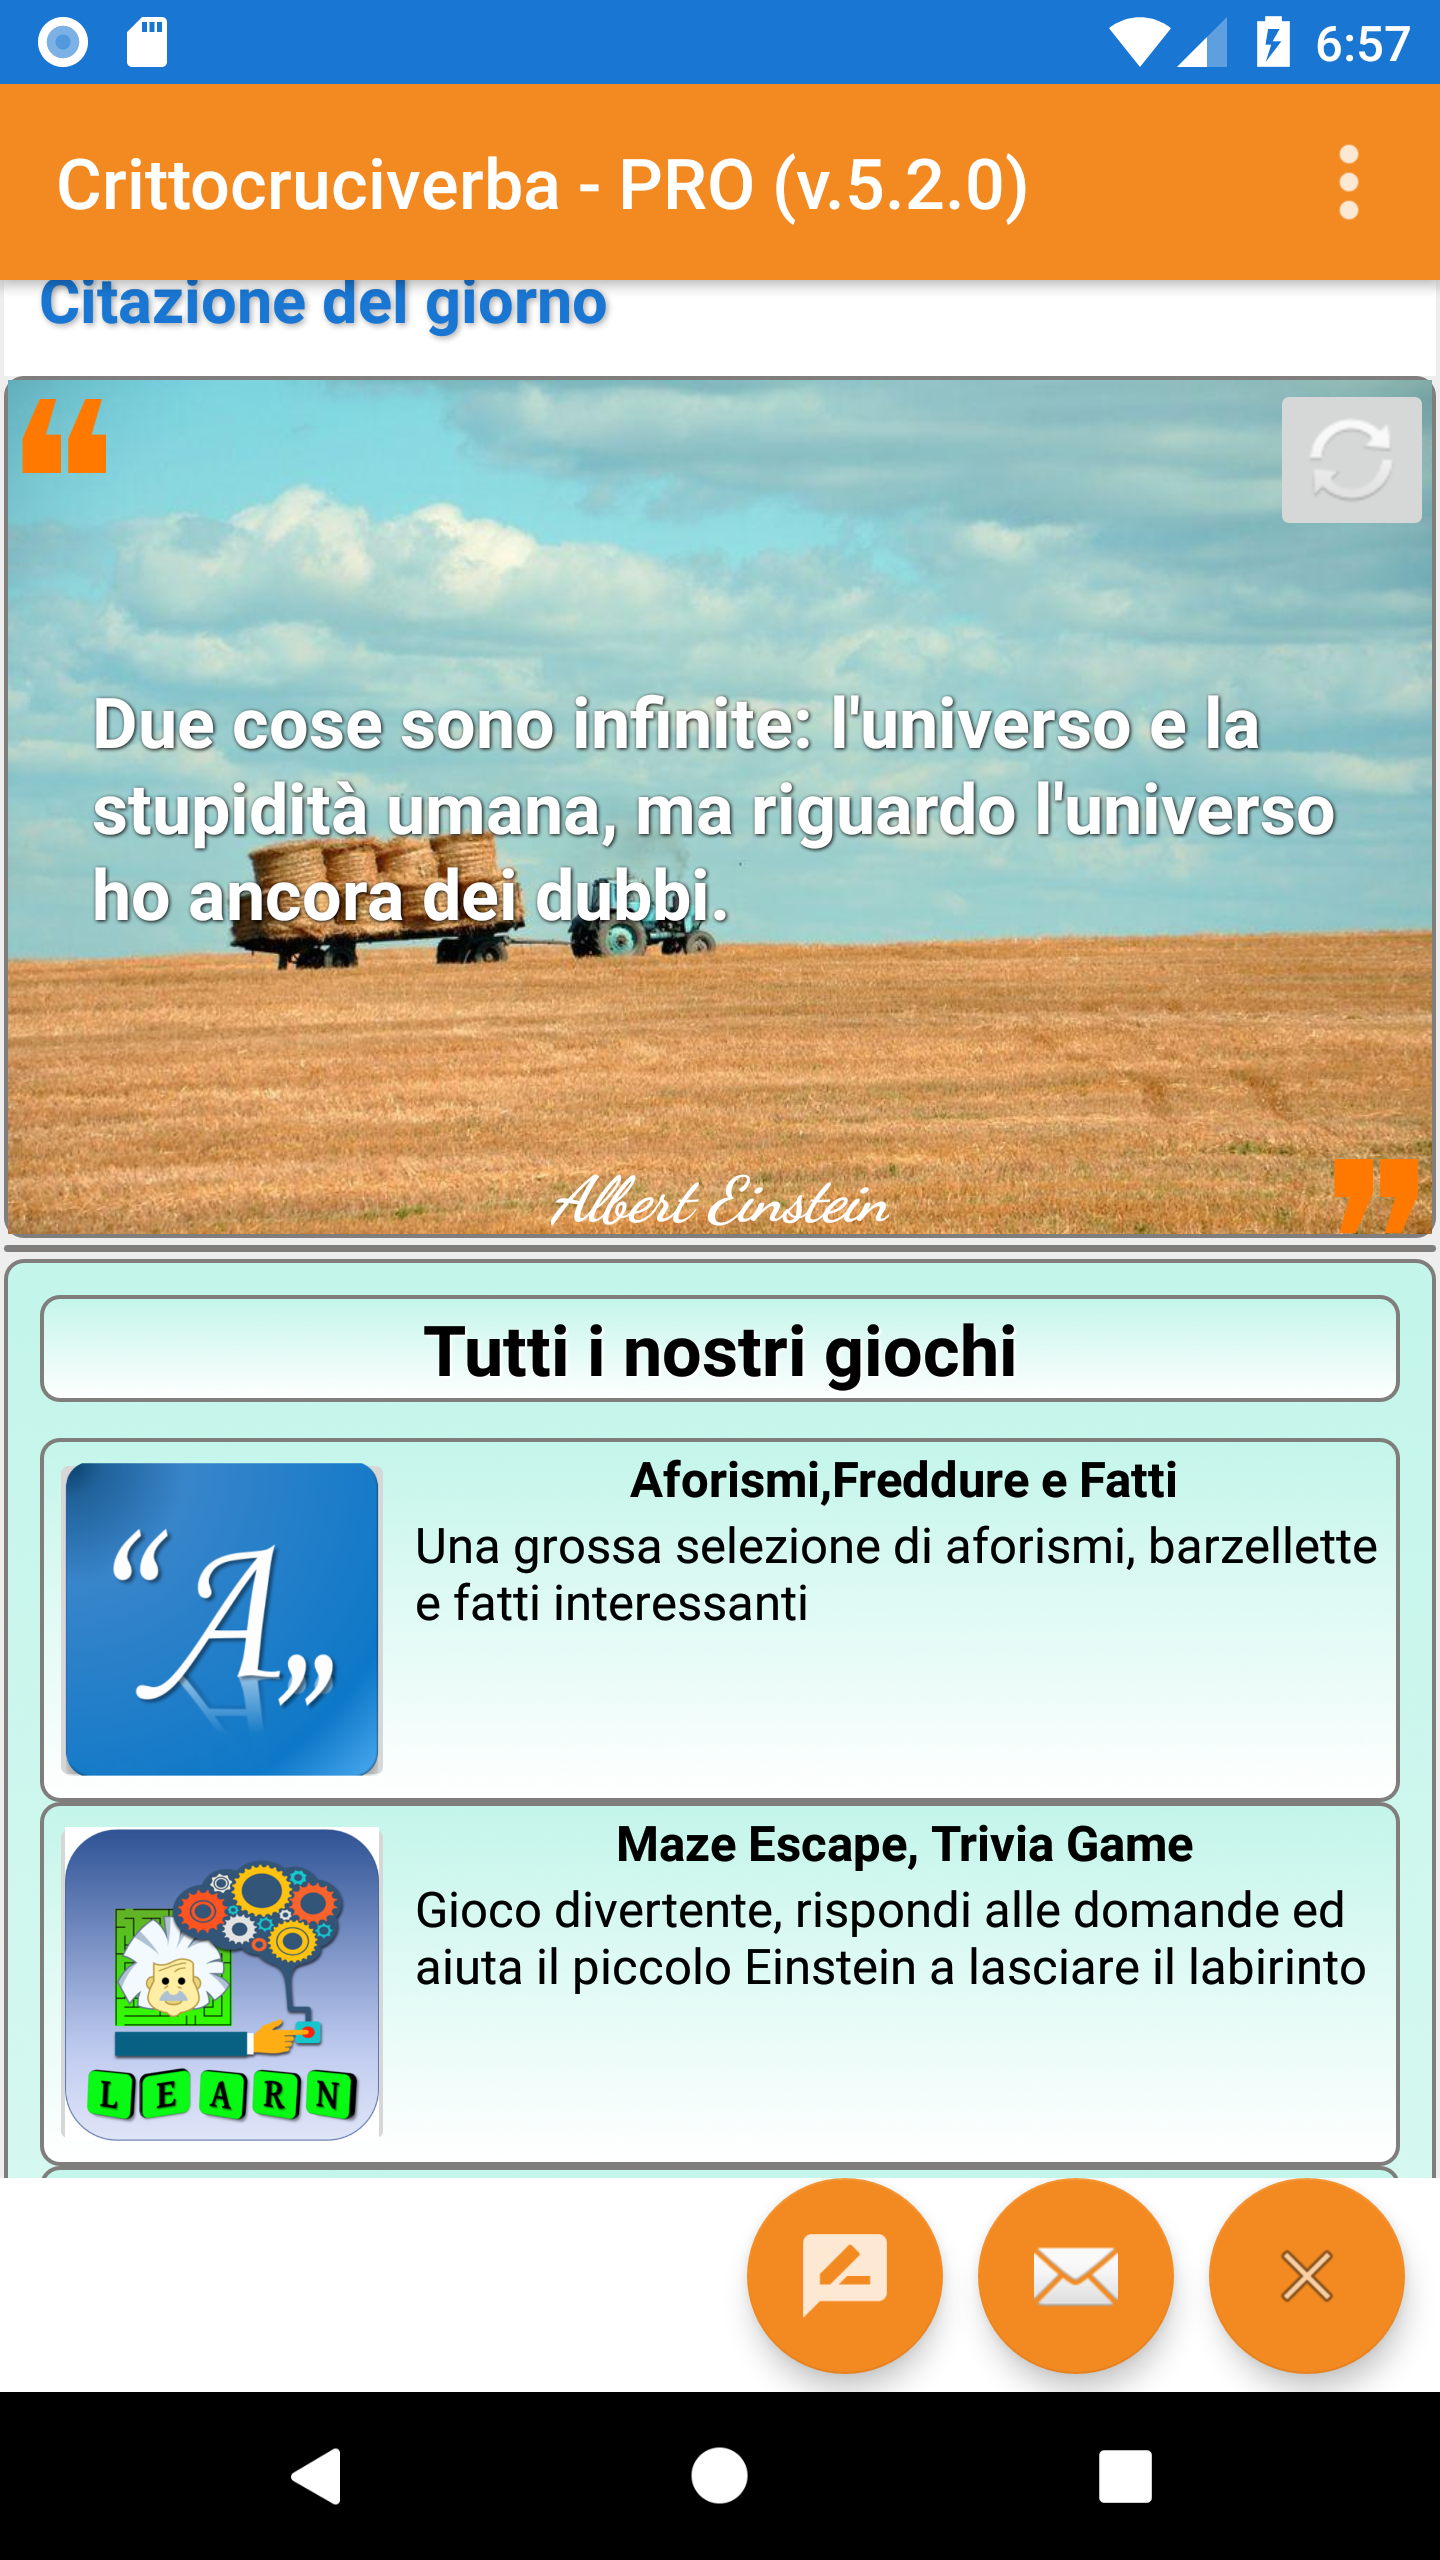 Android application Cruciverba Crittografati screenshort